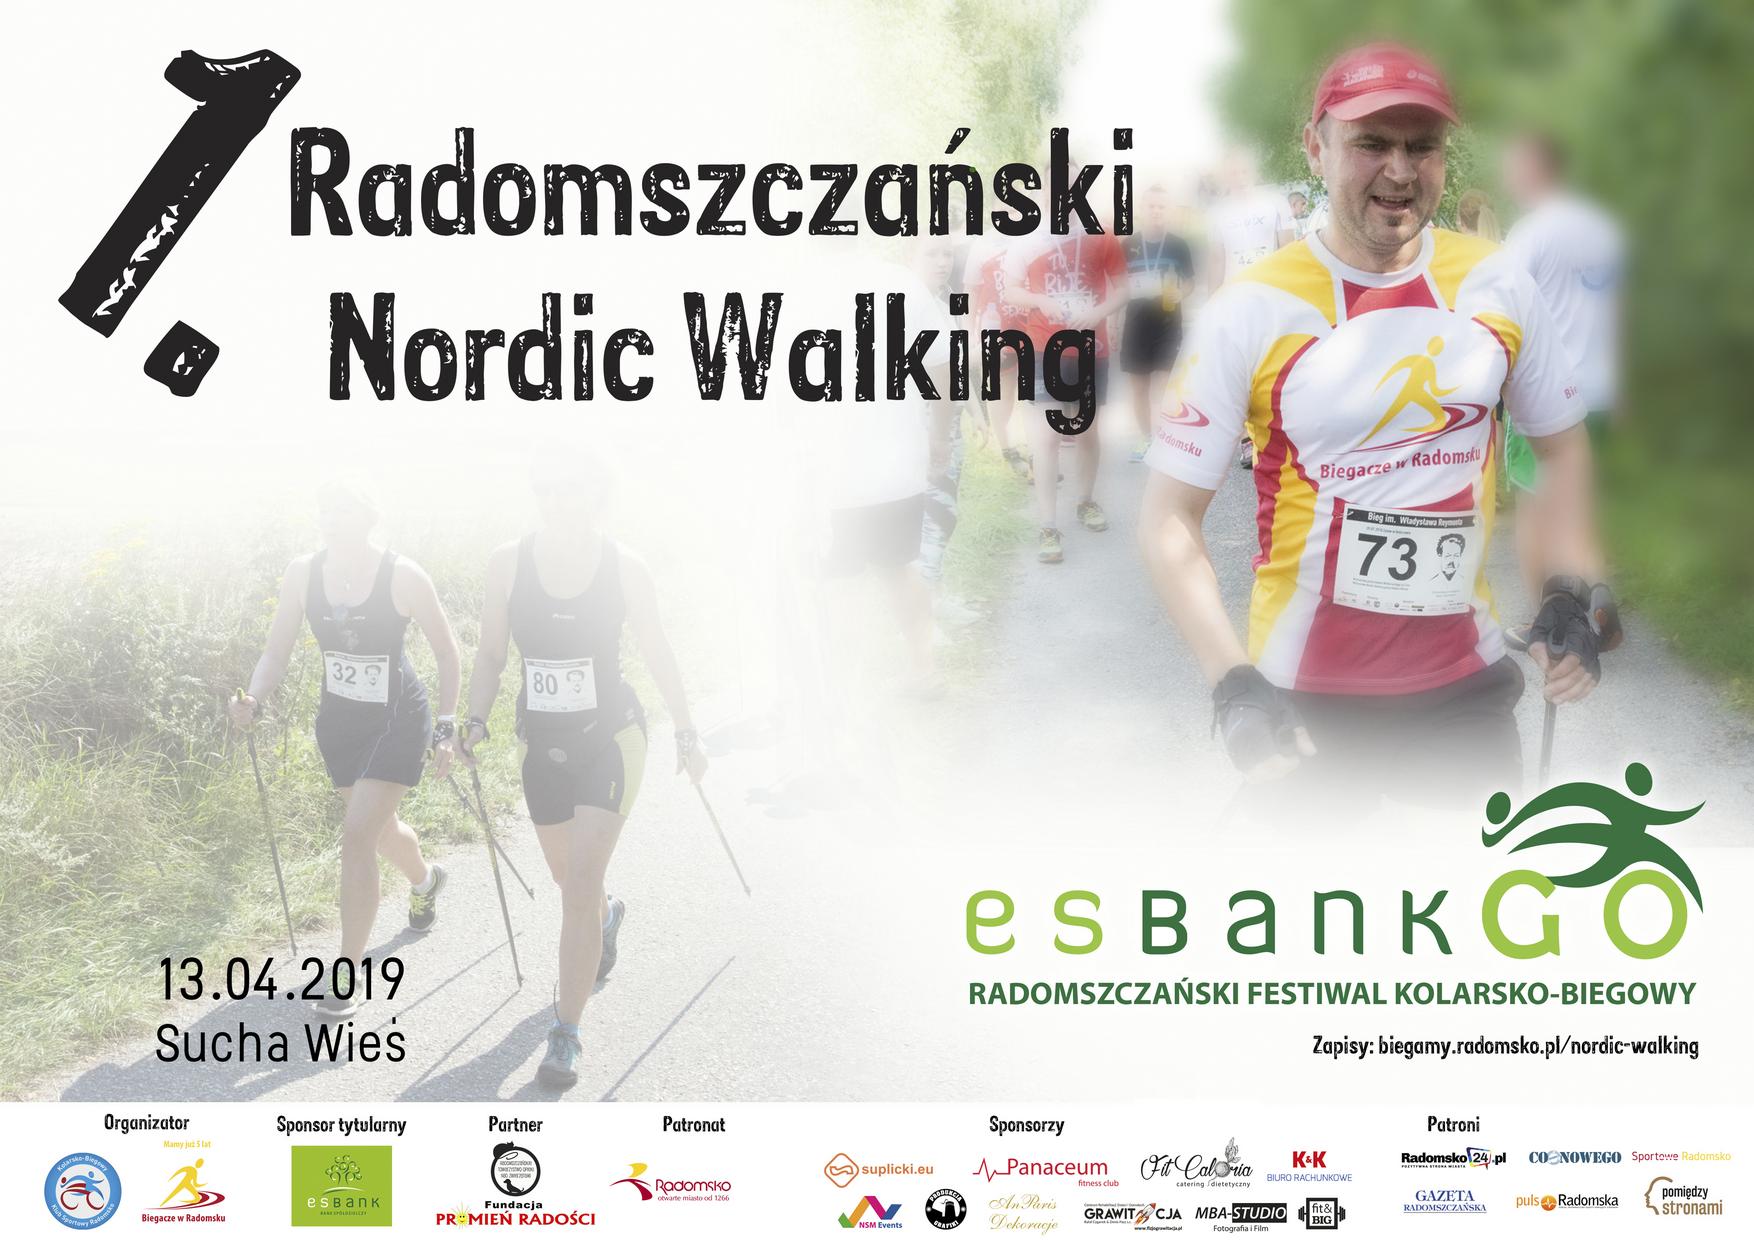 1. Radomszczański Nordic Walking